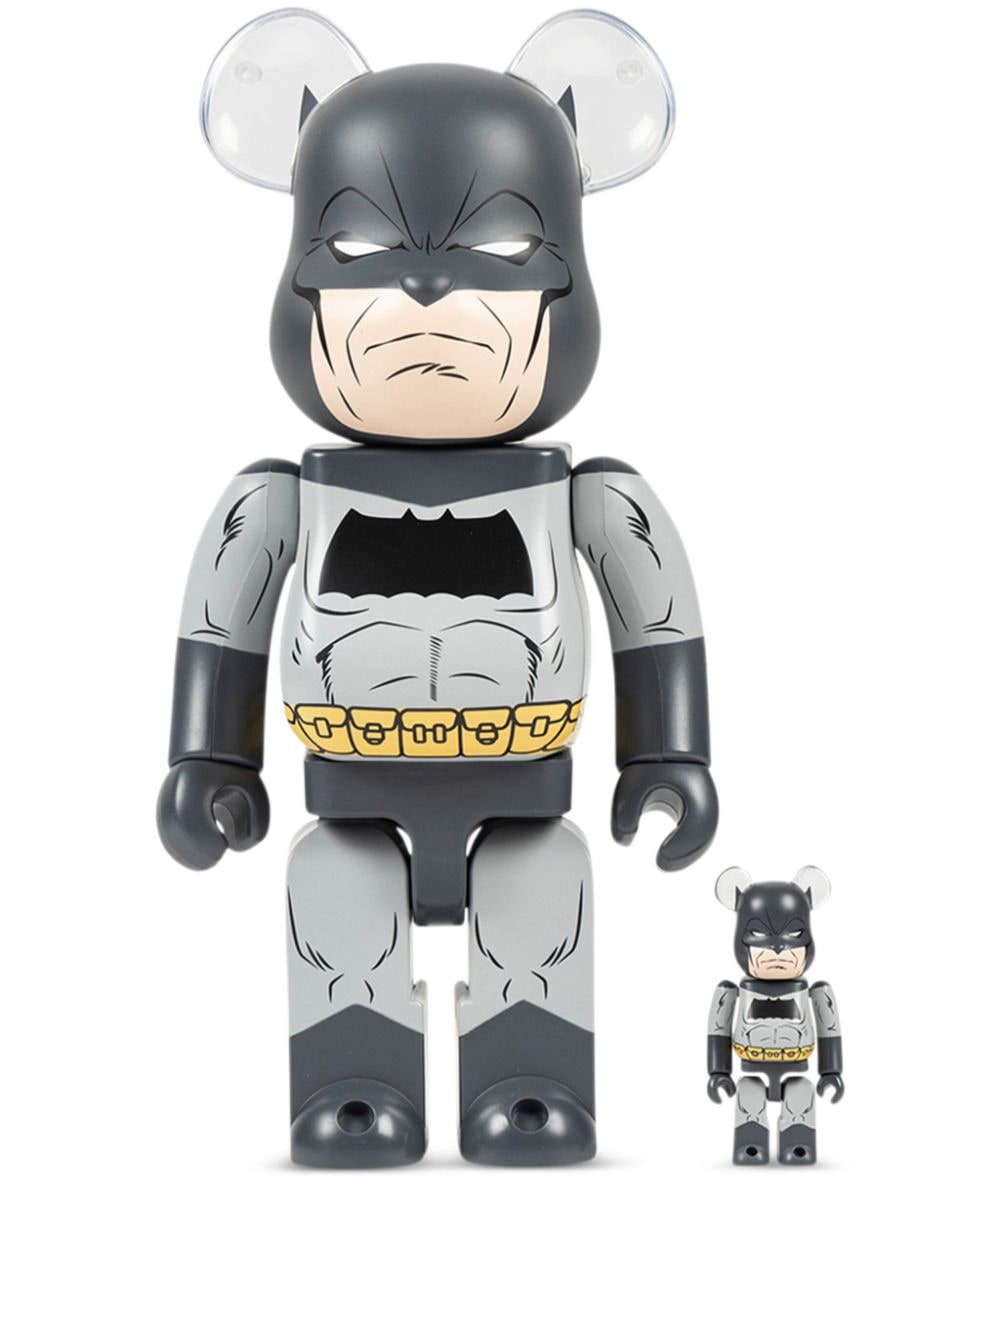 Medicom Toy X Batman The Dark Knight Returns Be@rbrick 100% And 400% Figure Set In Grey